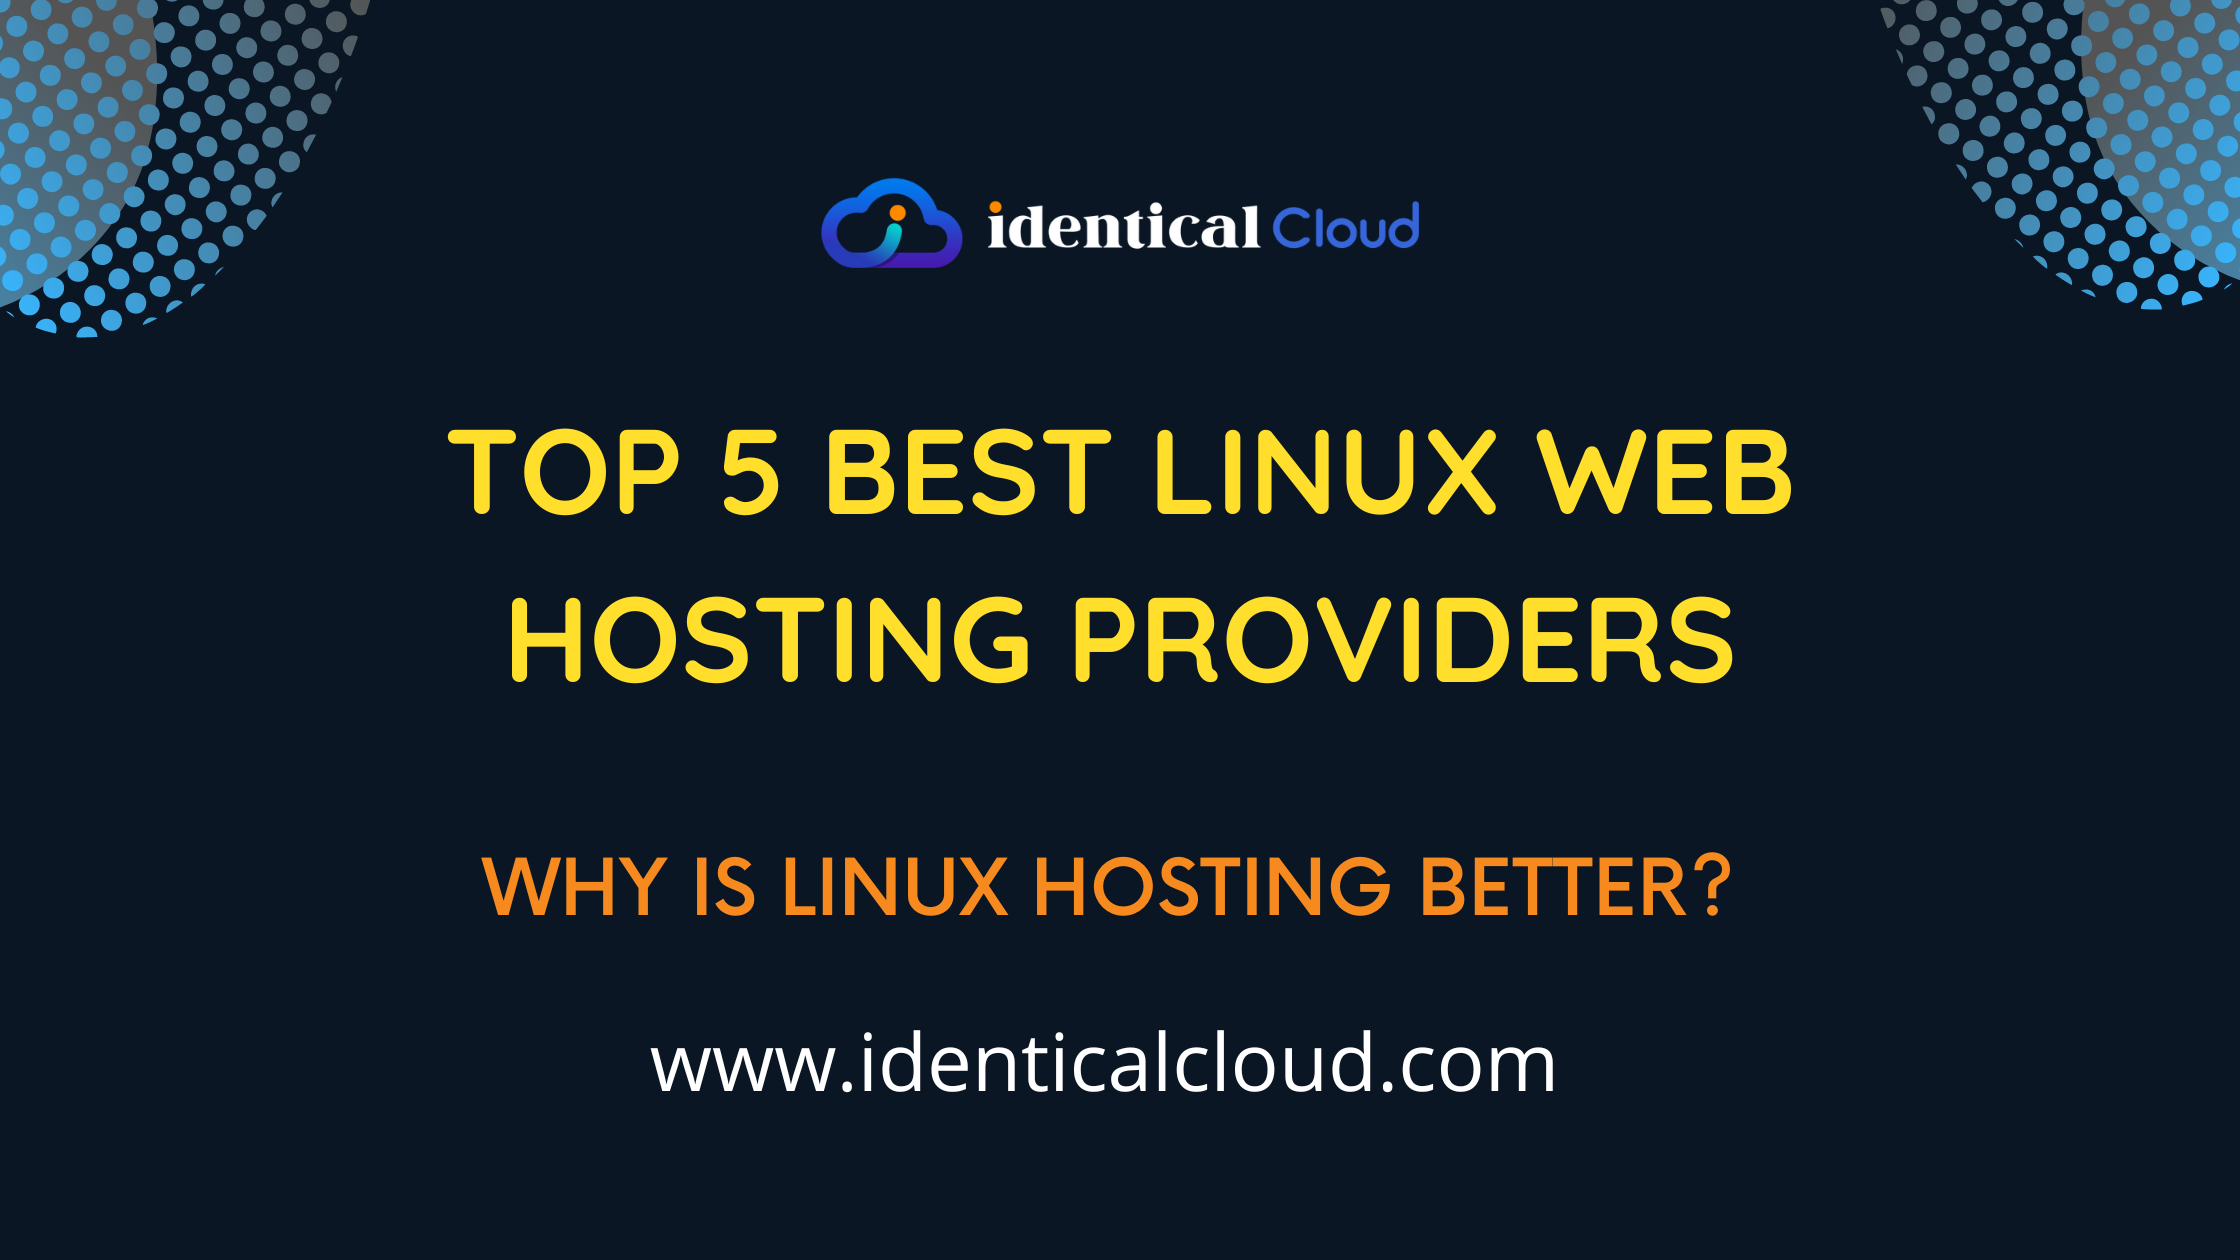 Top 5 Best Linux Web hosting providers - identicalcloud.com